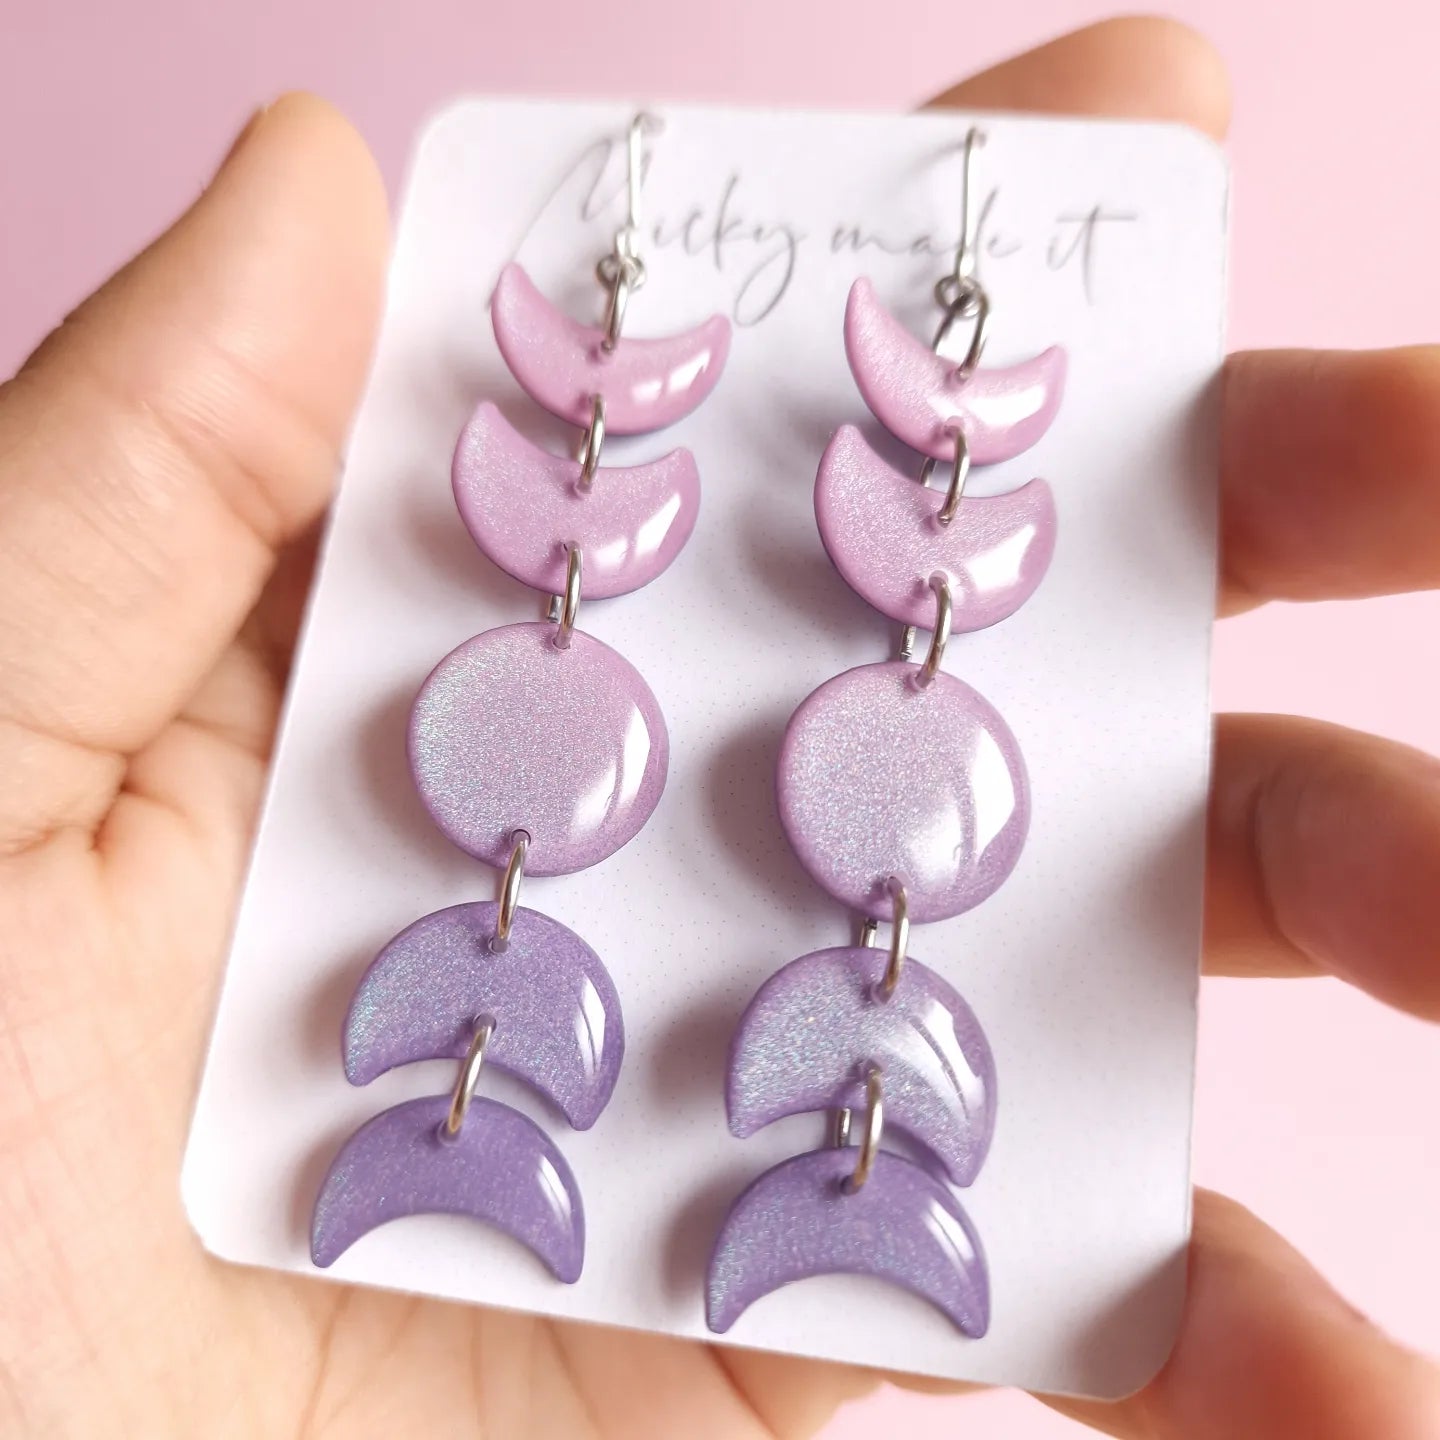 Hecate moon phase earrings in Twinkle Twinkle